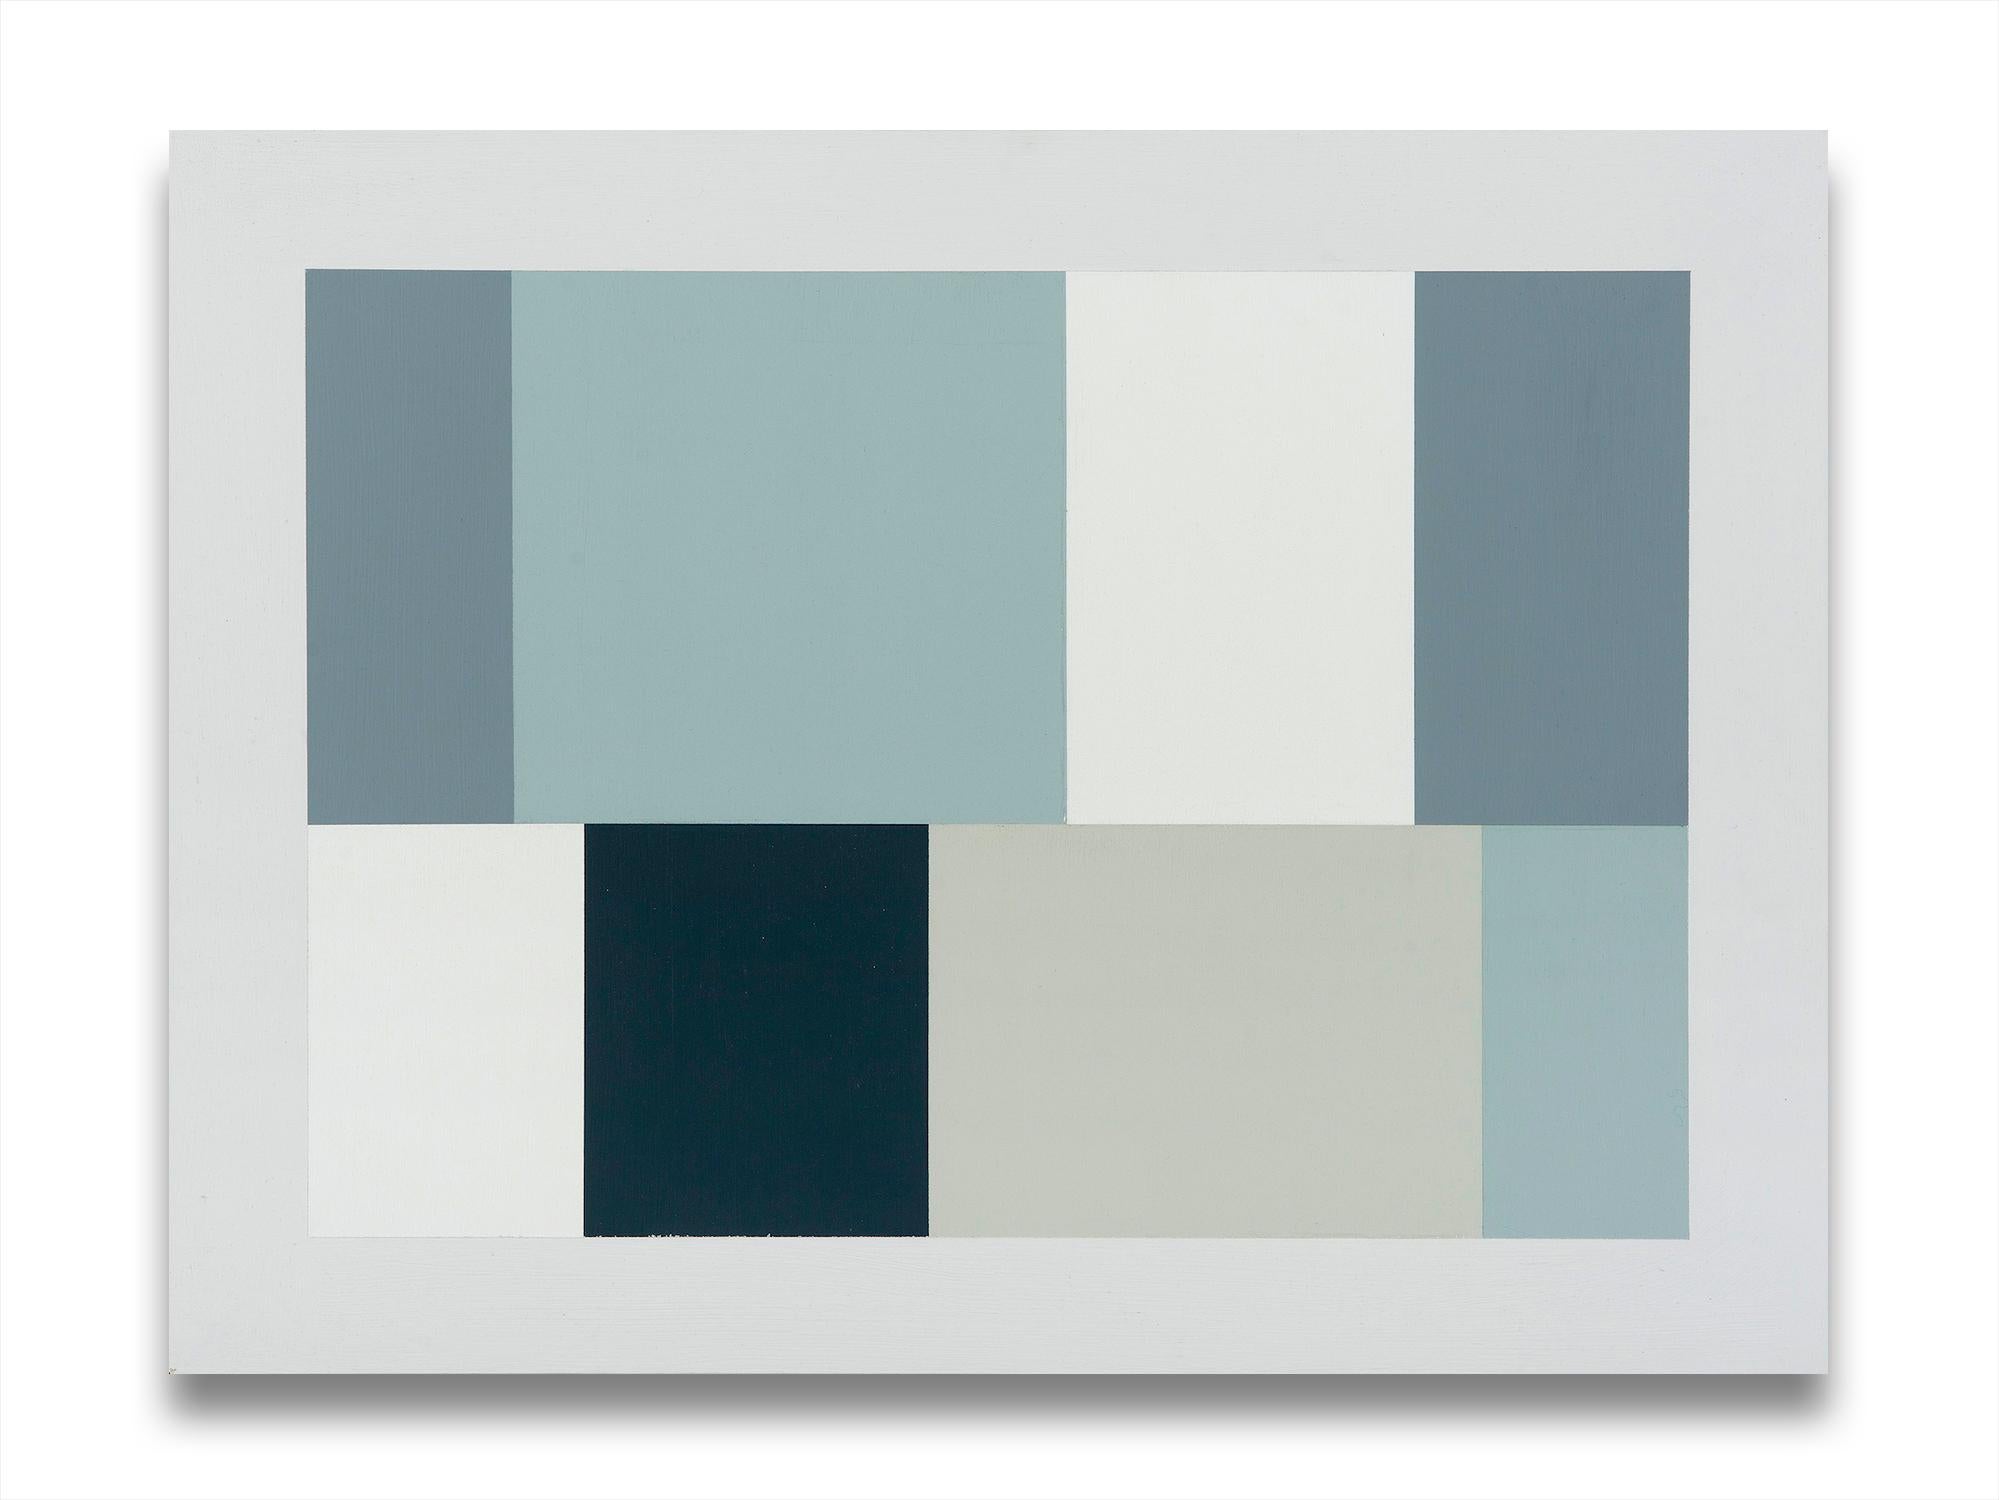 Abstract Painting Tom McGlynn - Motif de test gris 1 (peinture abstraite)